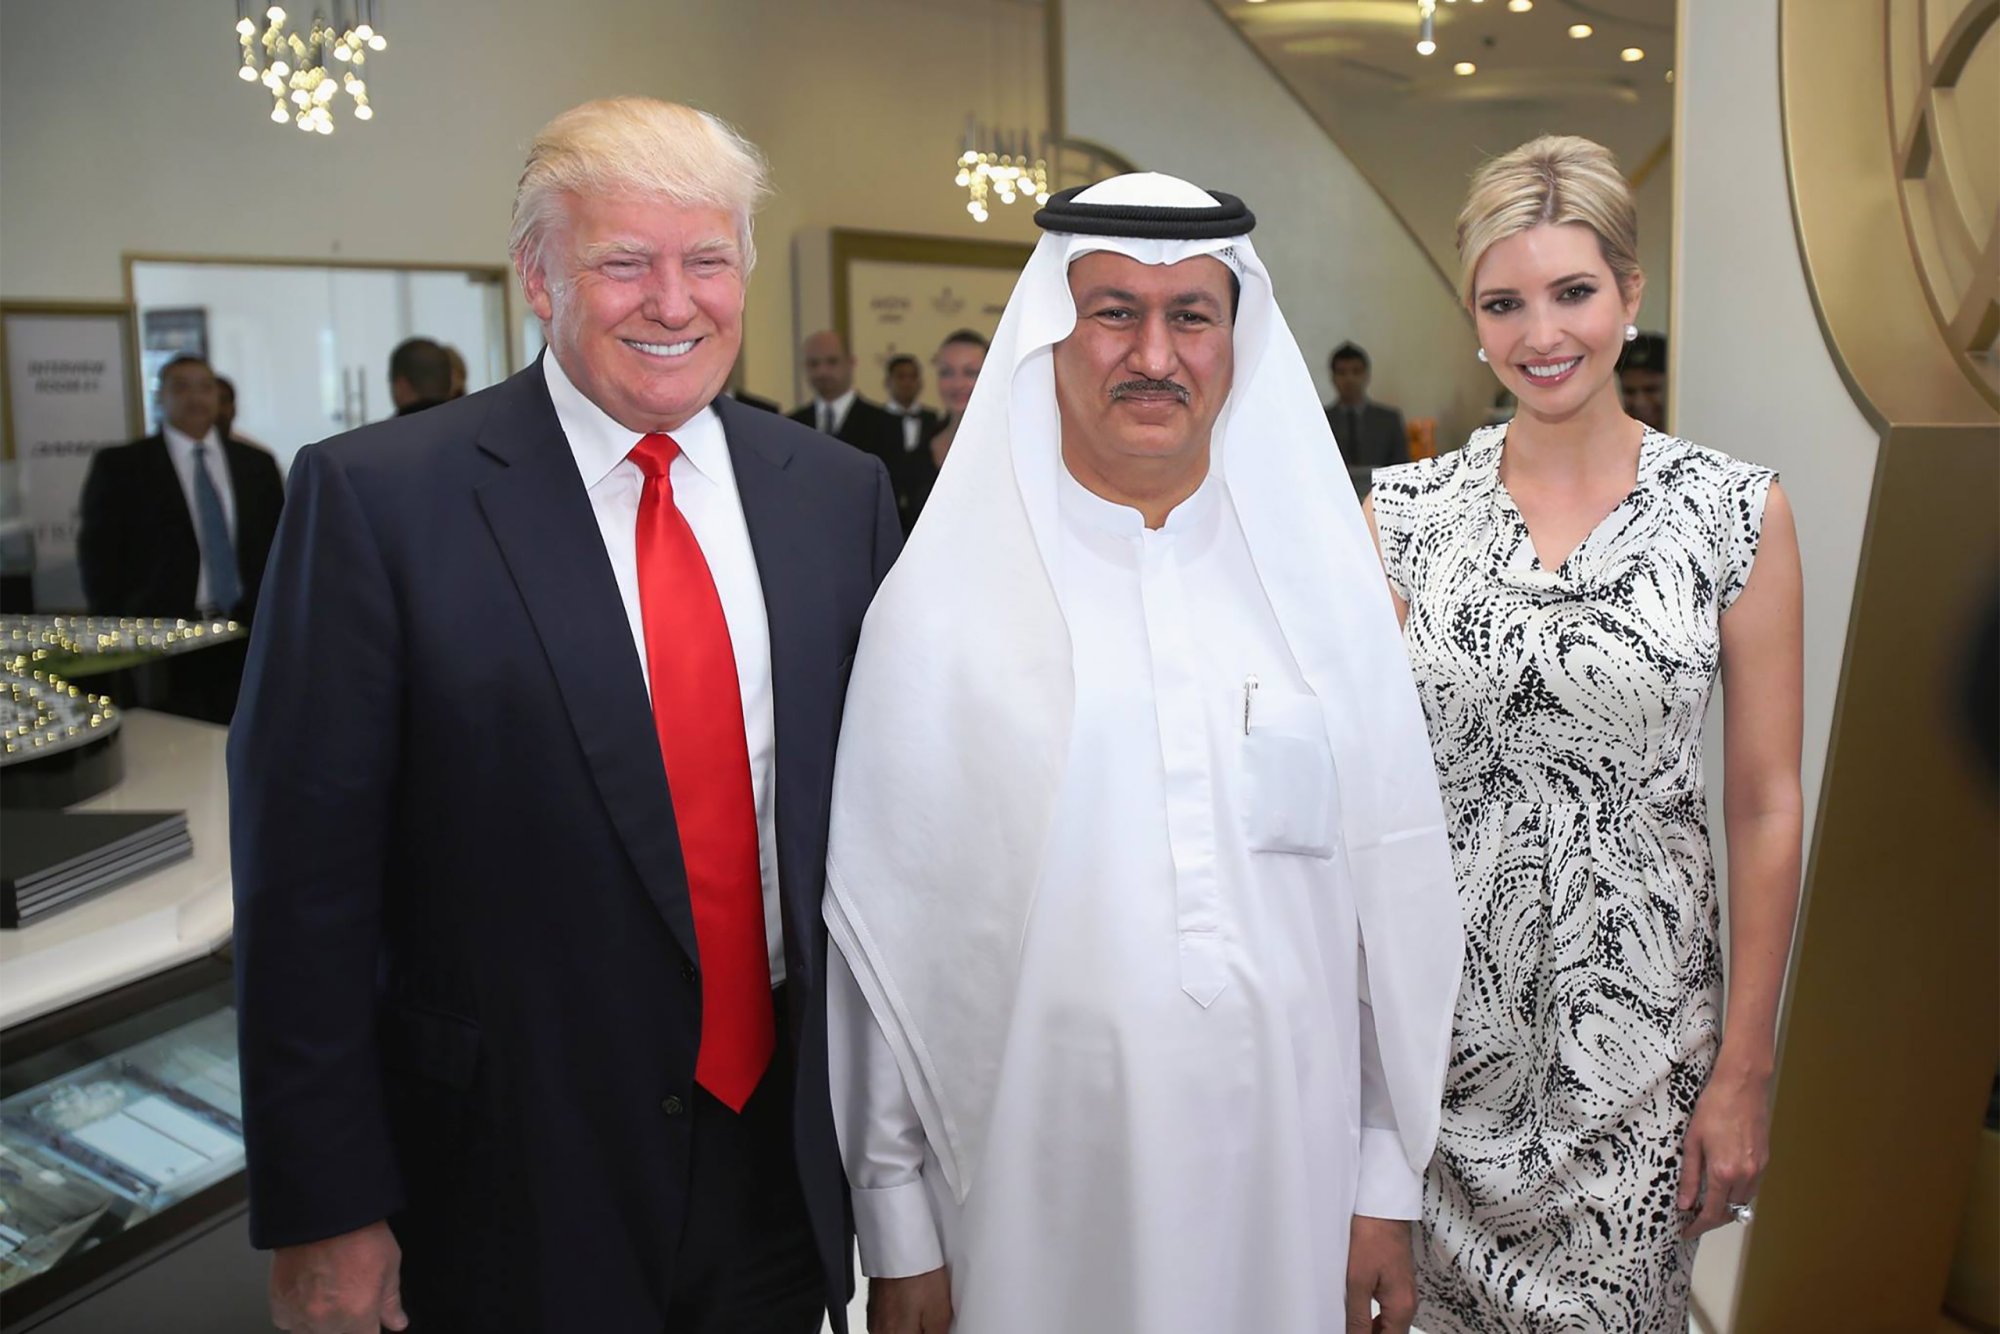 Trump Saudi Arabia